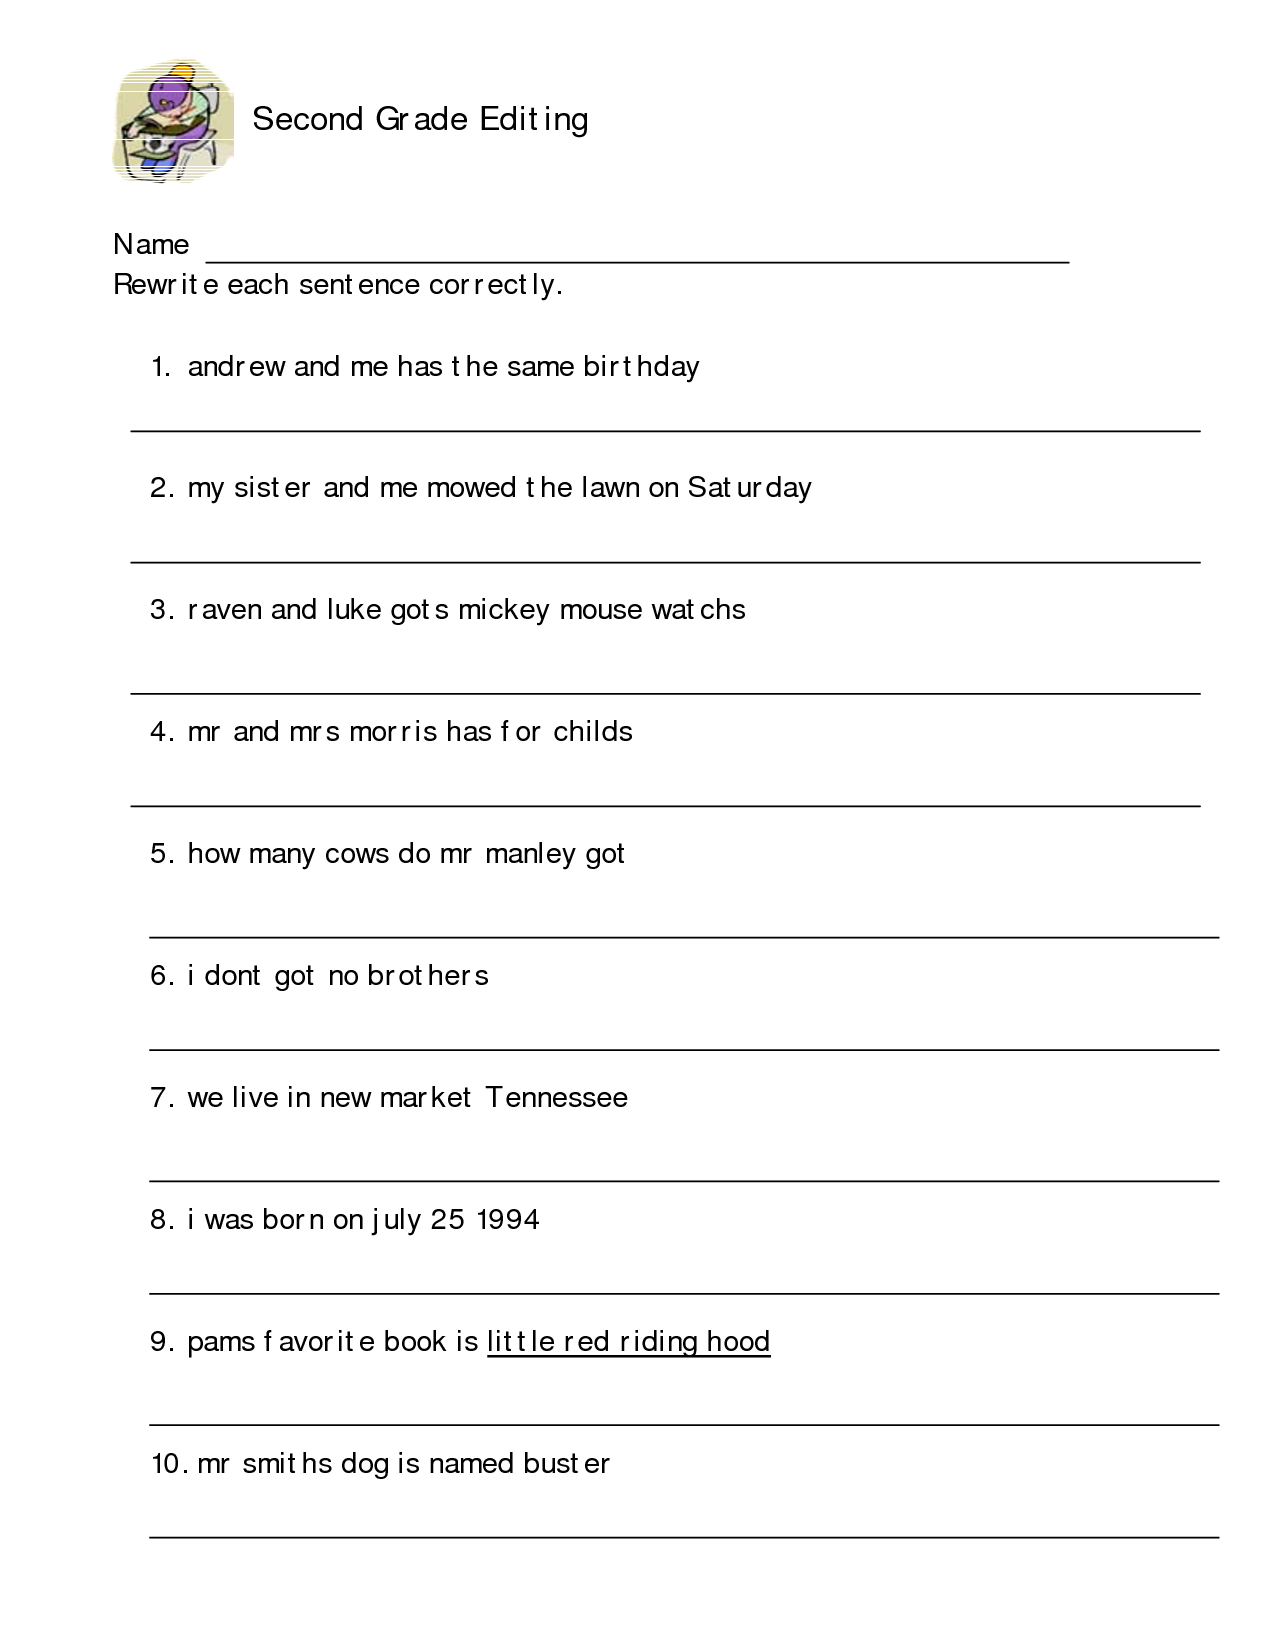 Second Grade Sentence Correction Worksheets